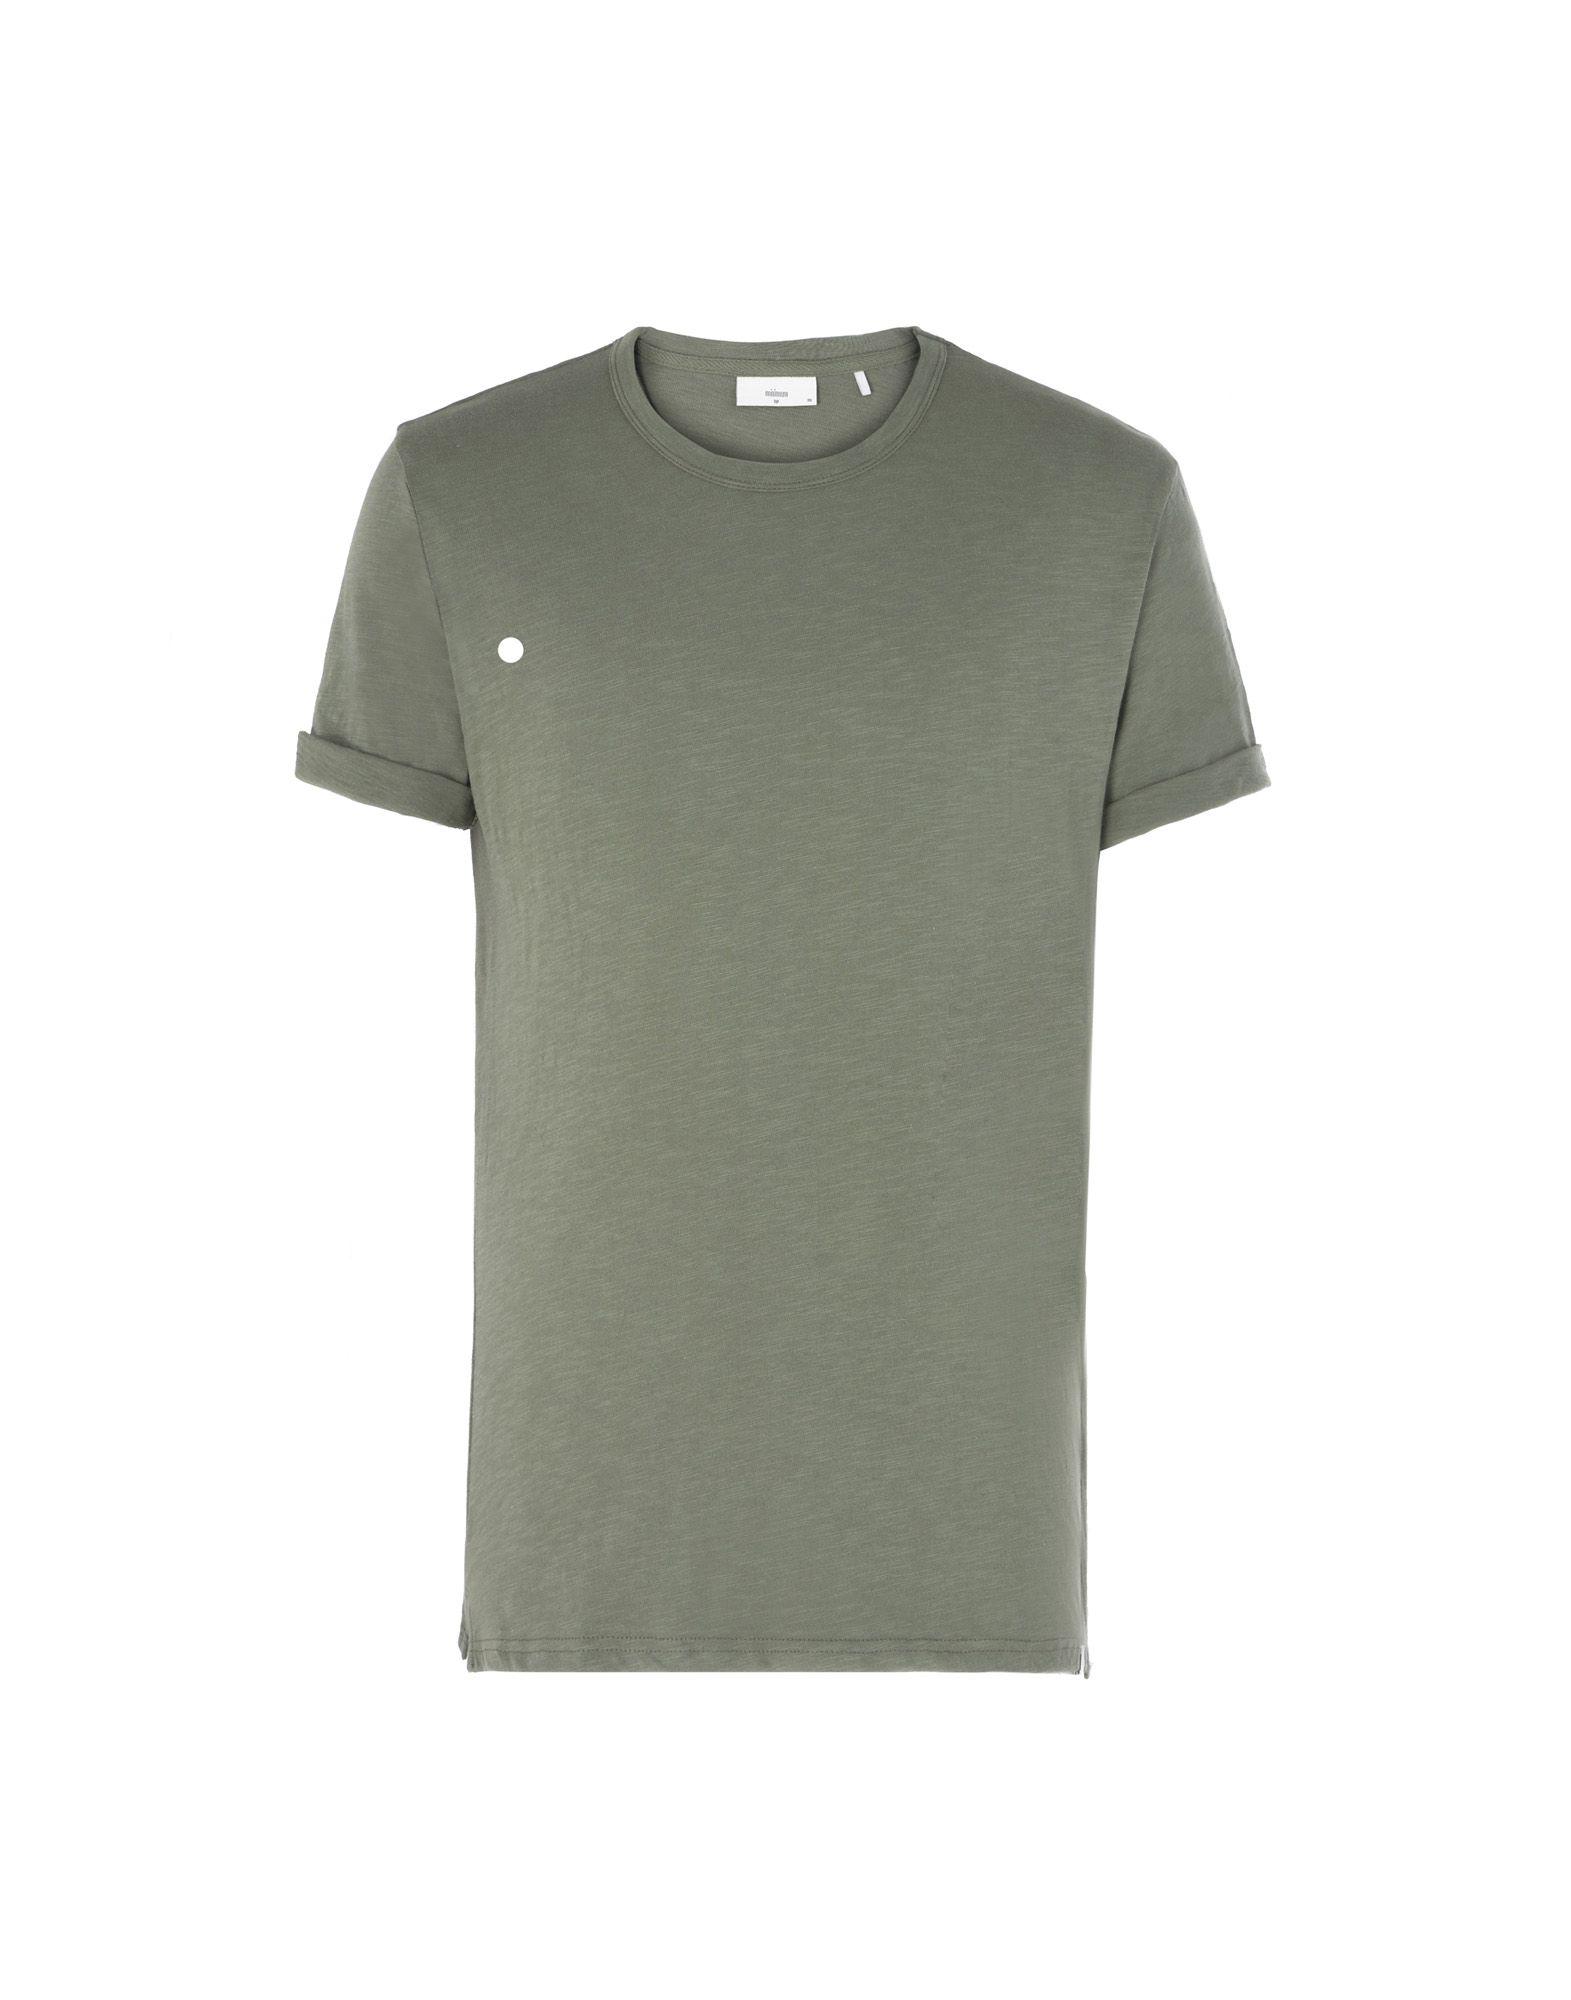 Lyst - Minimum T-shirt in Green for Men